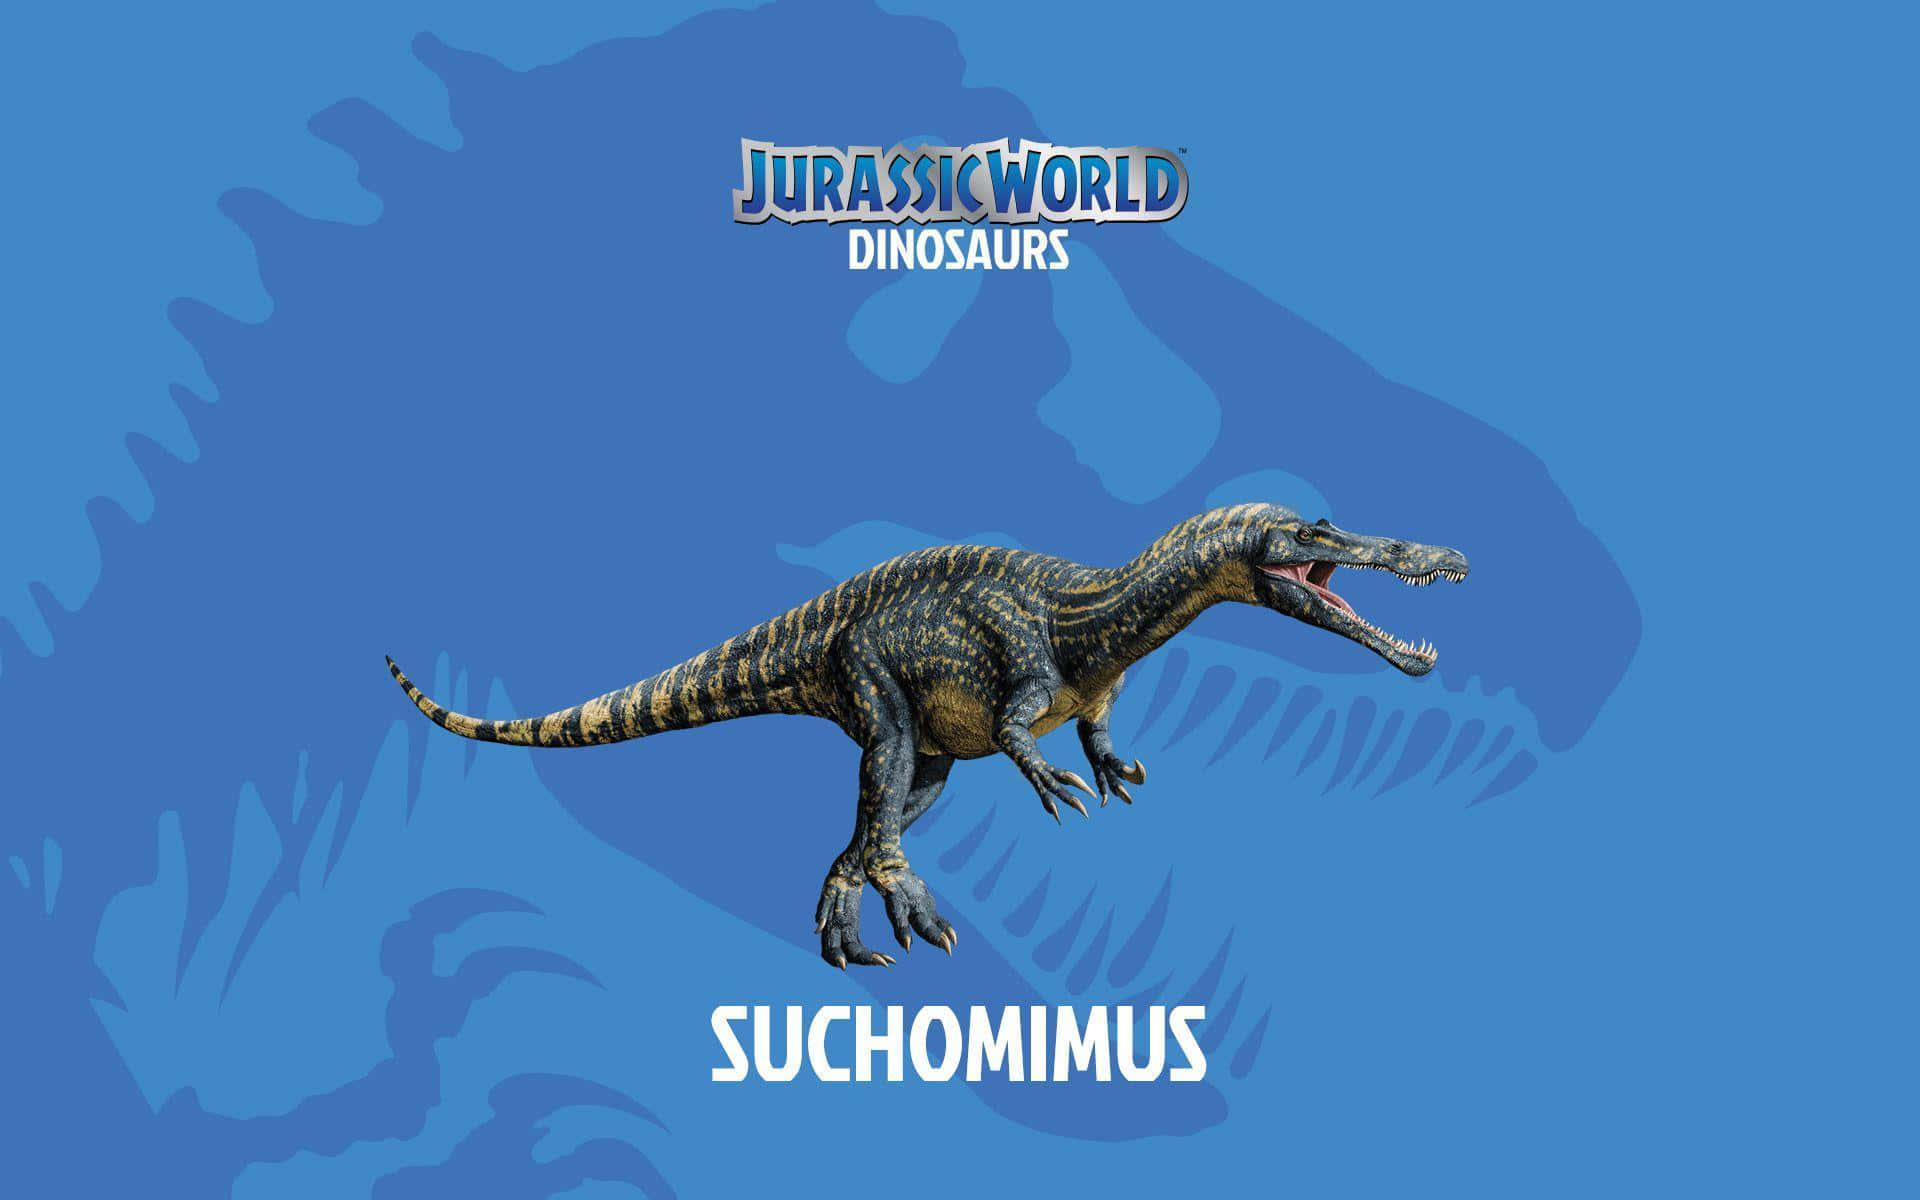 Jurassicworld Dinosaurs - Sycomoremus